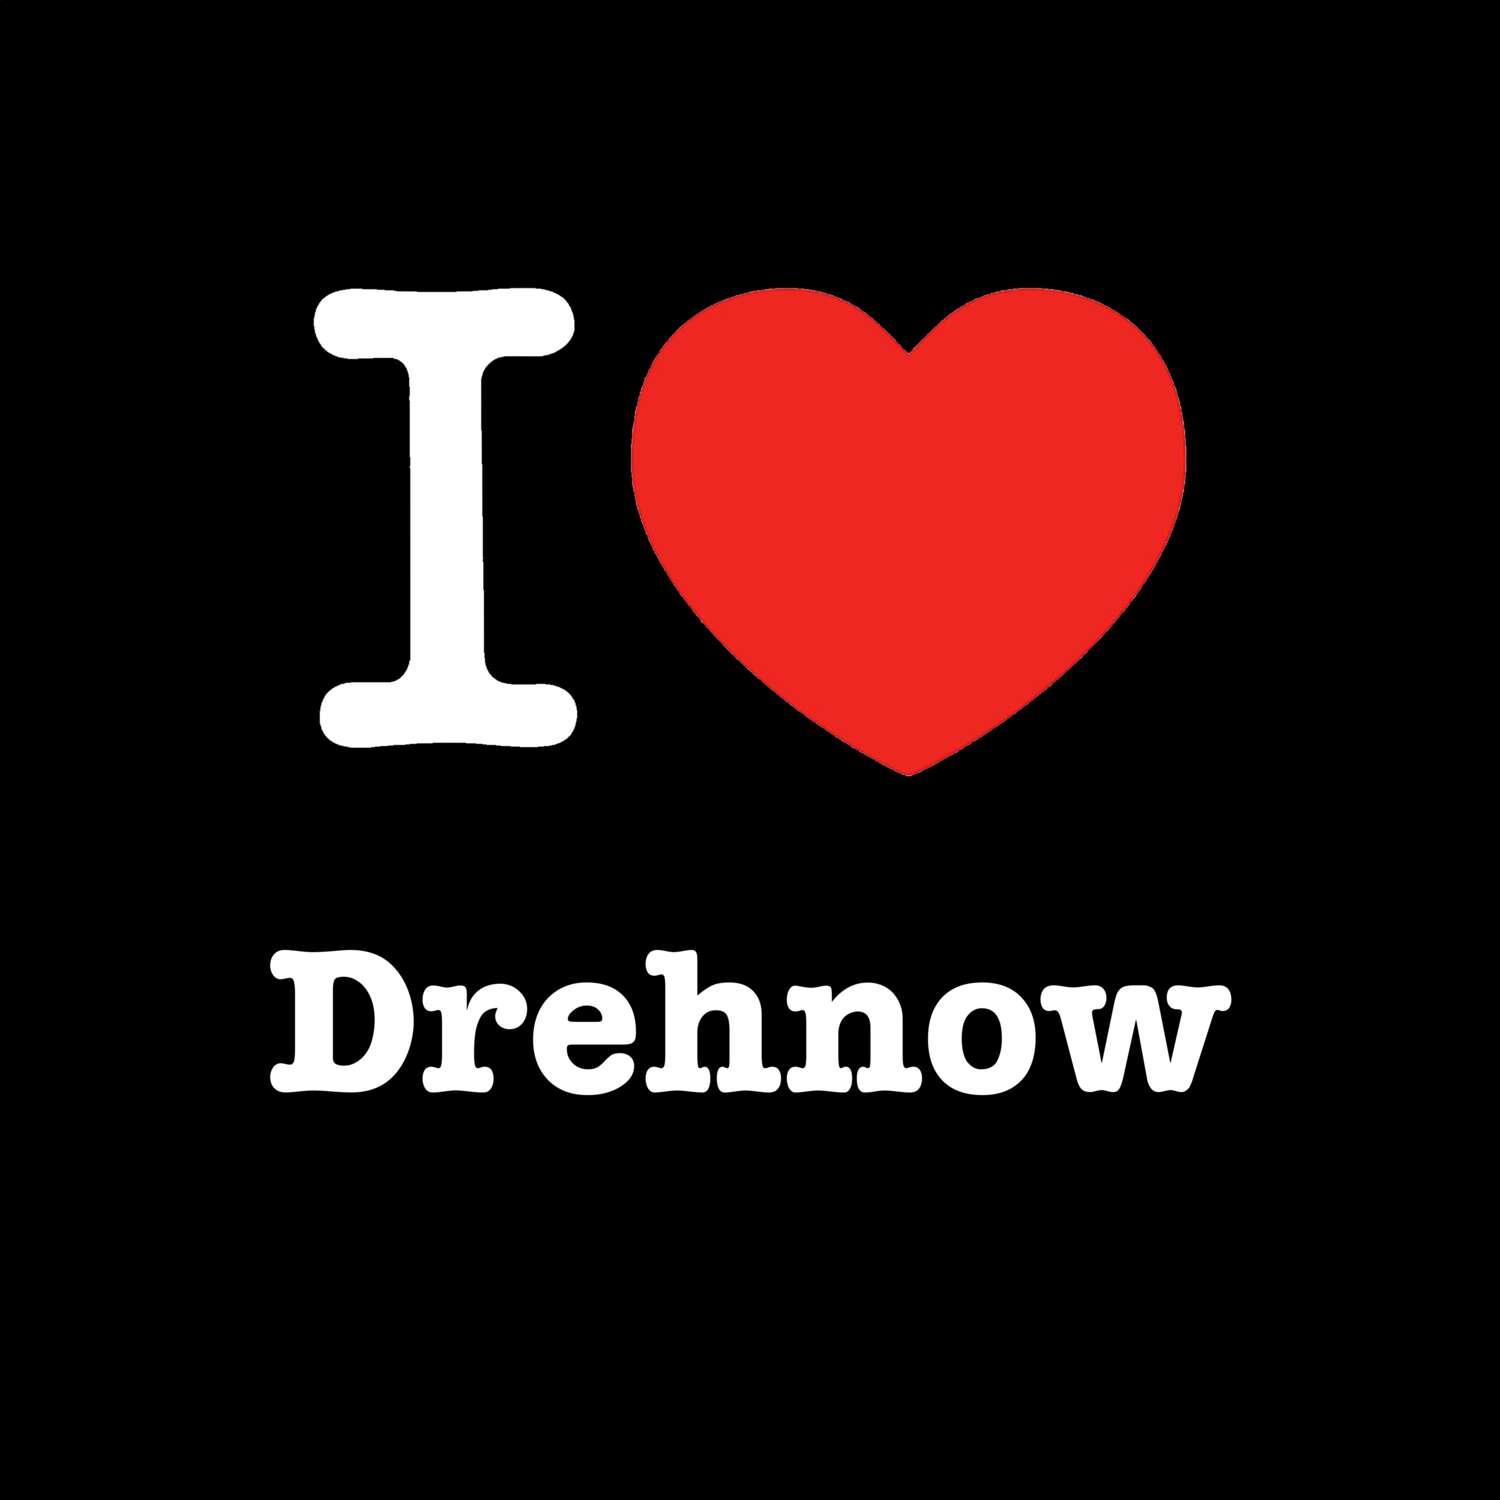 Drehnow T-Shirt »I love«